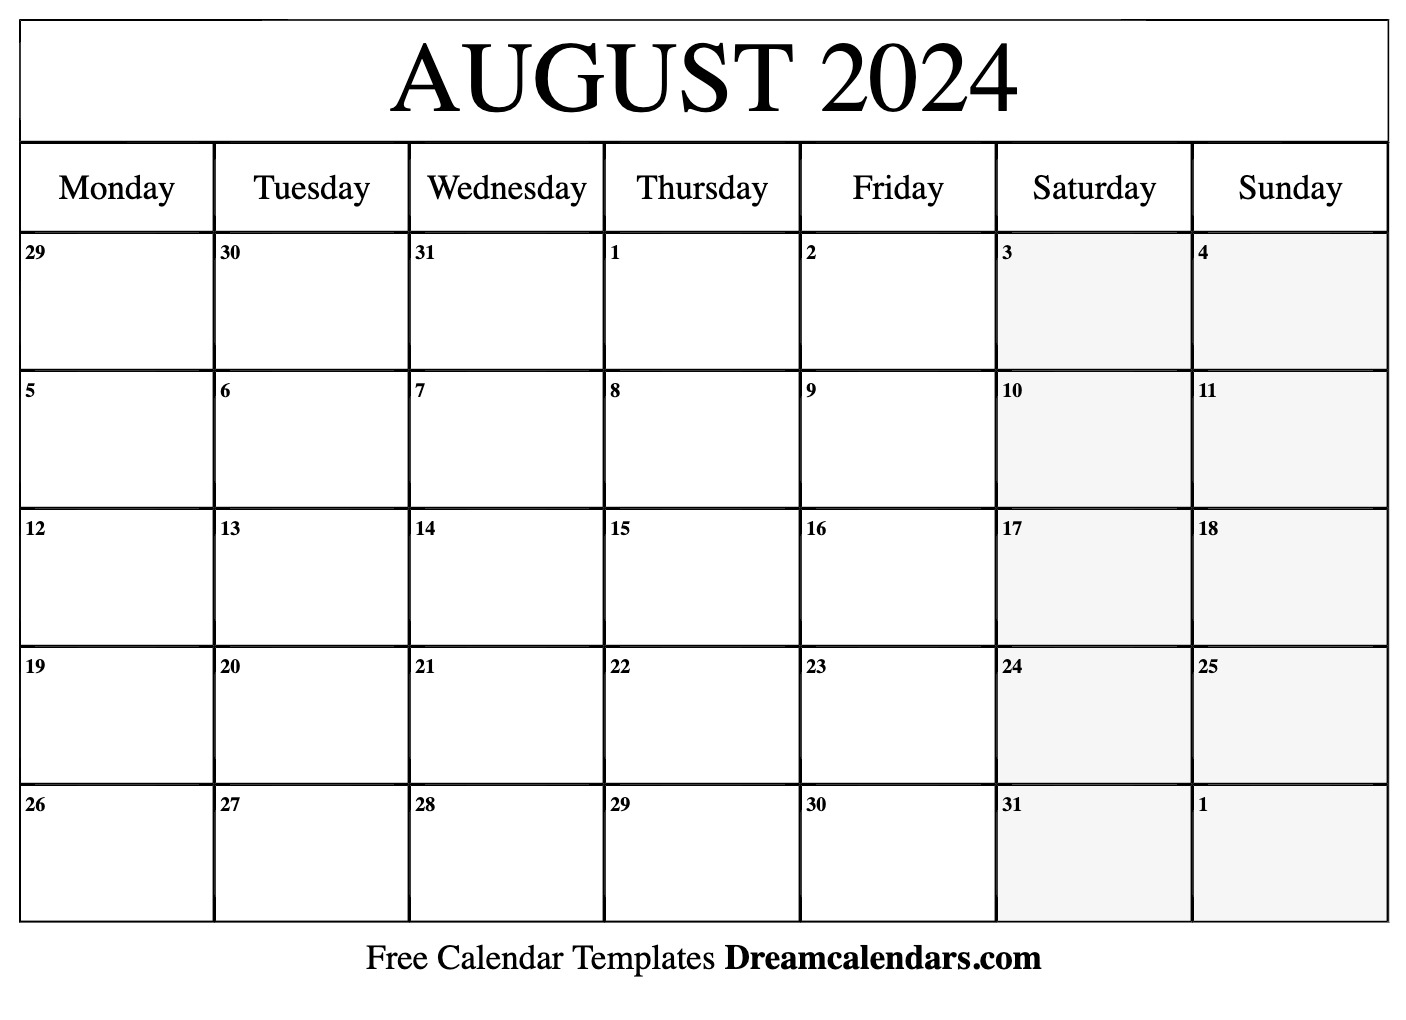 August 2024 Calendar | Free Blank Printable With Holidays for Aug 2024 Printable Calendar